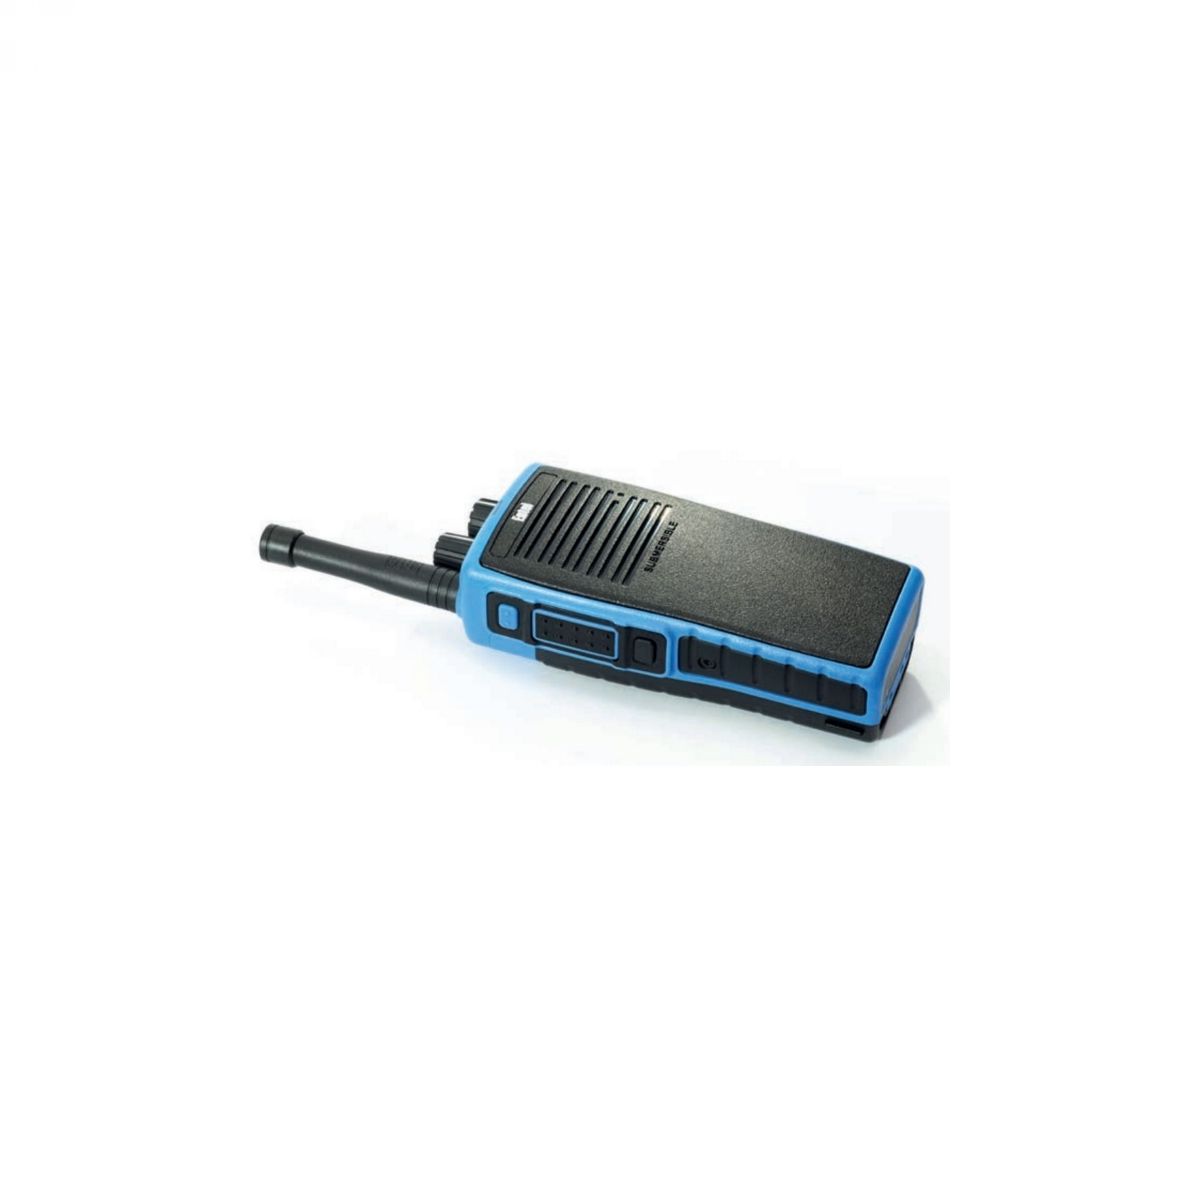 ENTEL DT844 prijenosni VHF radio DTEx serija